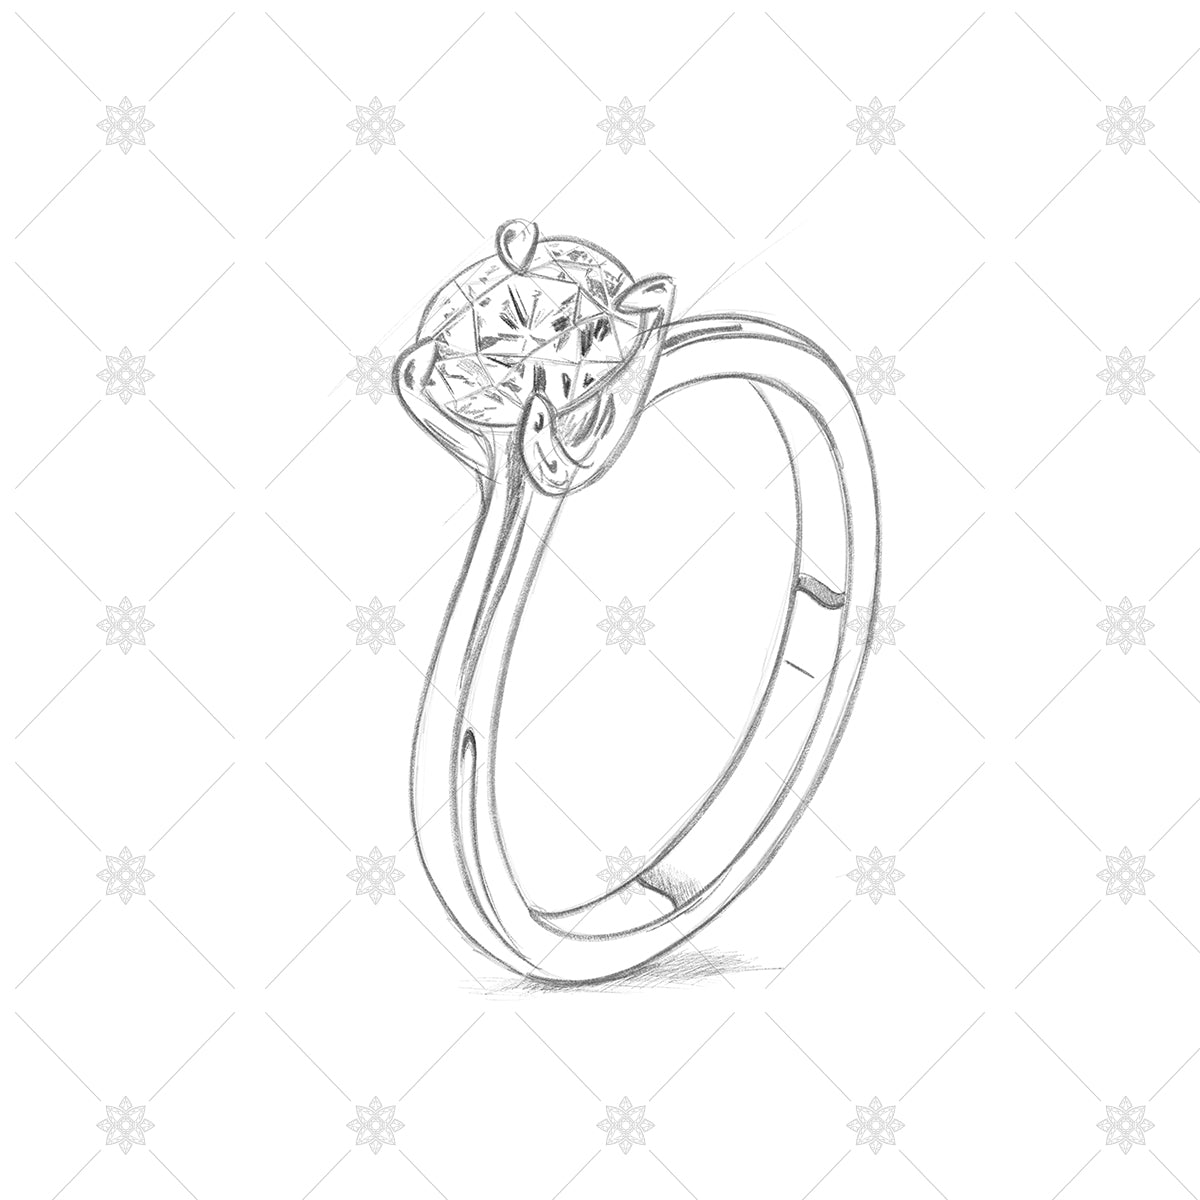 Solitaire diamond ring pencil sketch